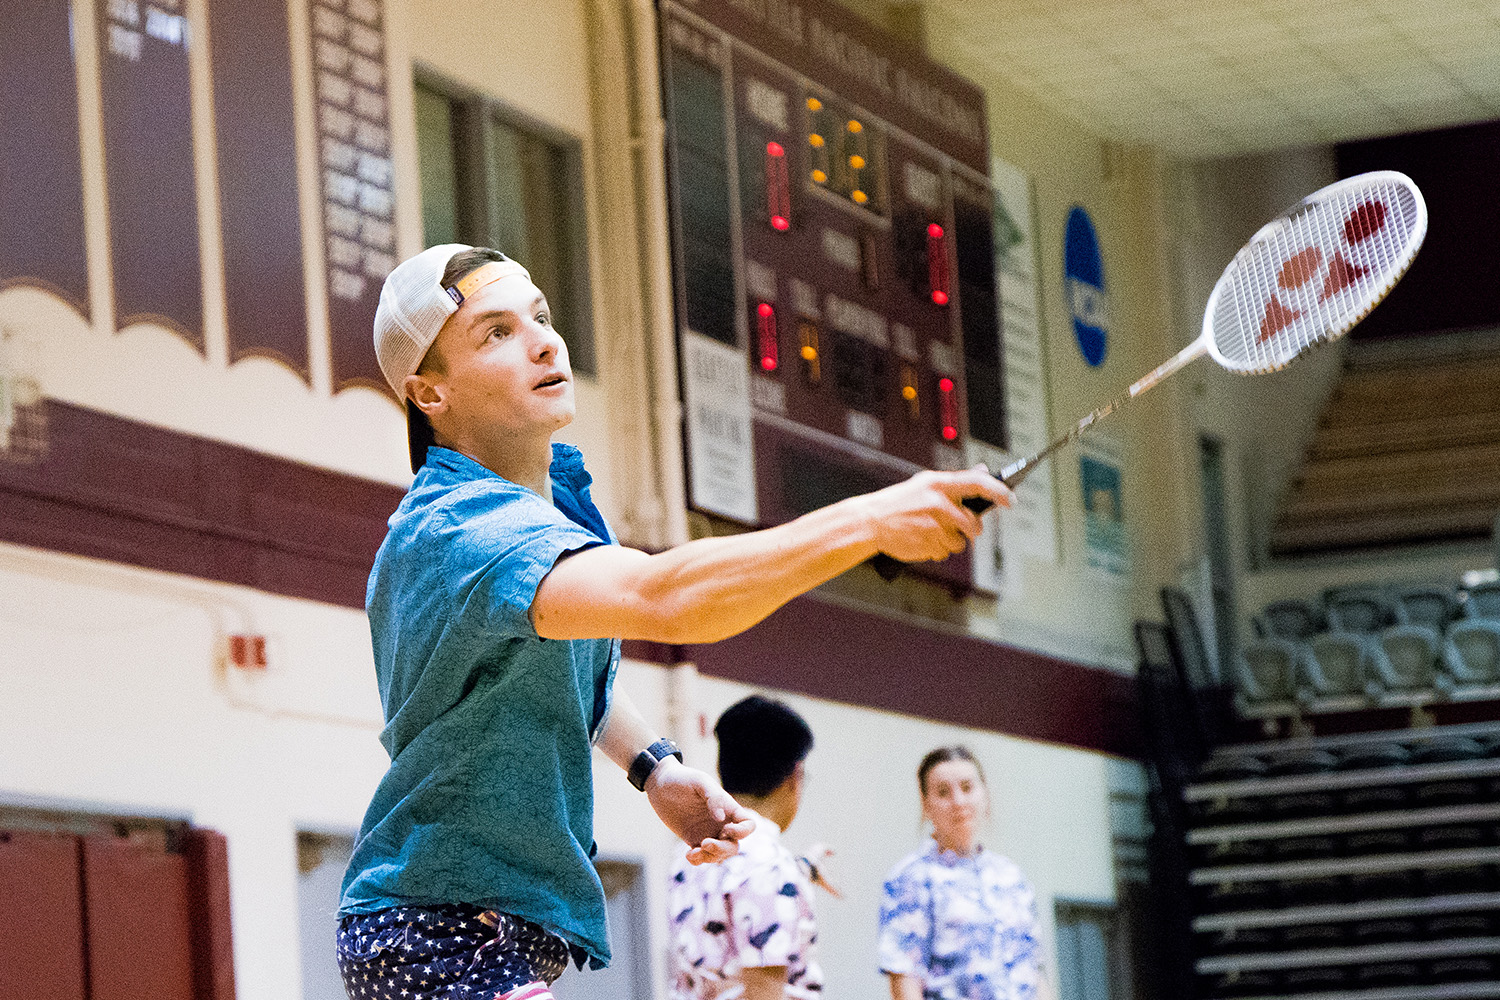 A student plays badminton | photo by Sydney Martin